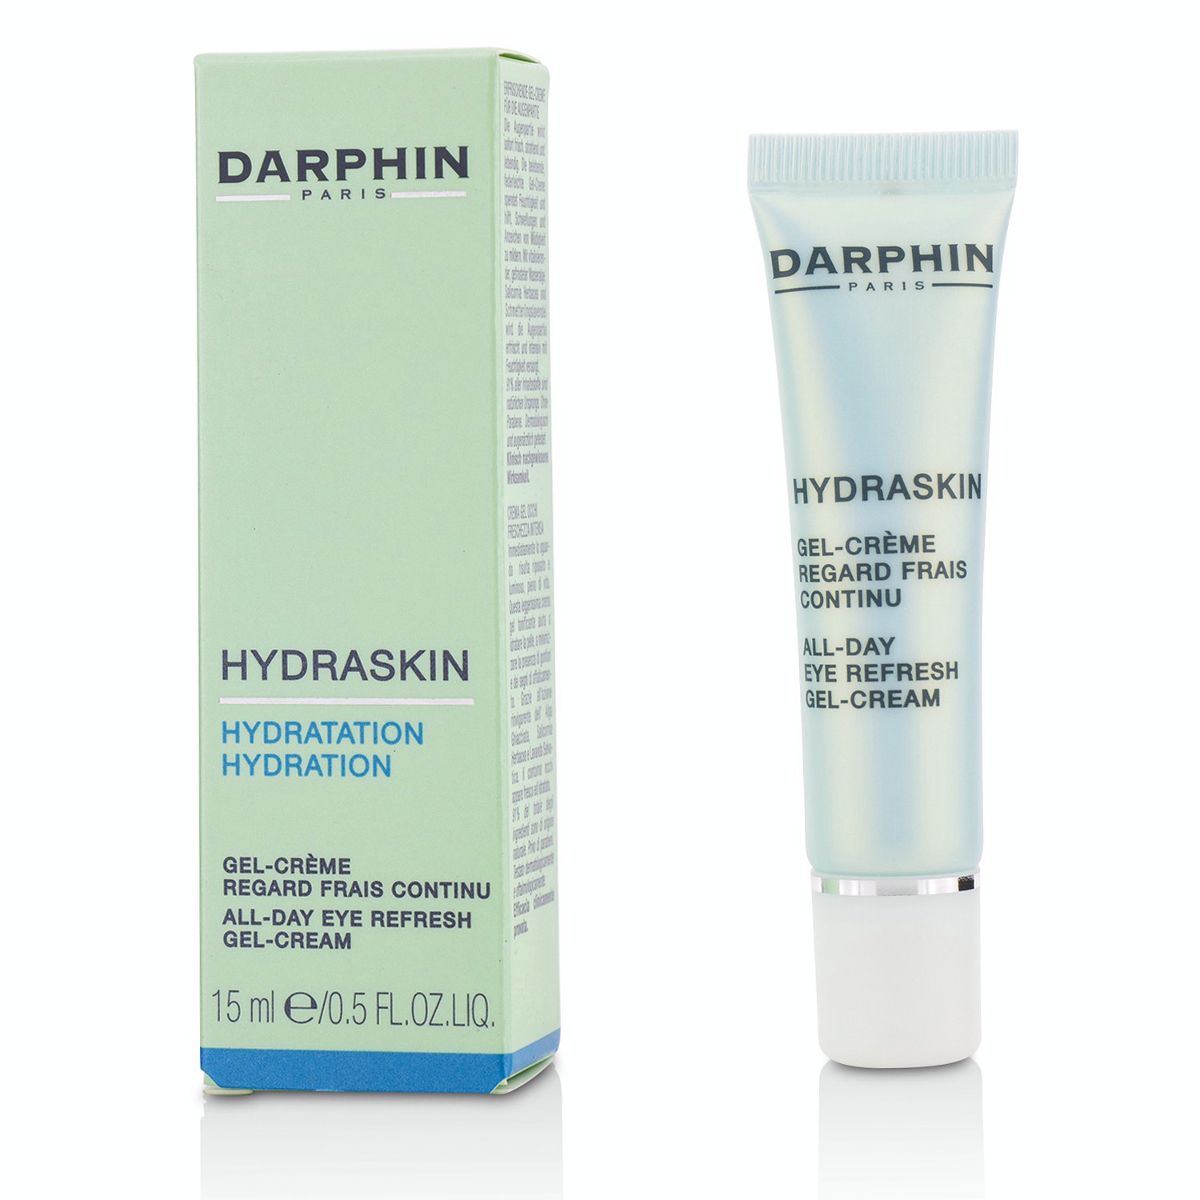 Hydraskin All-Day Eye Refresh Gel-Cream Darphin Image